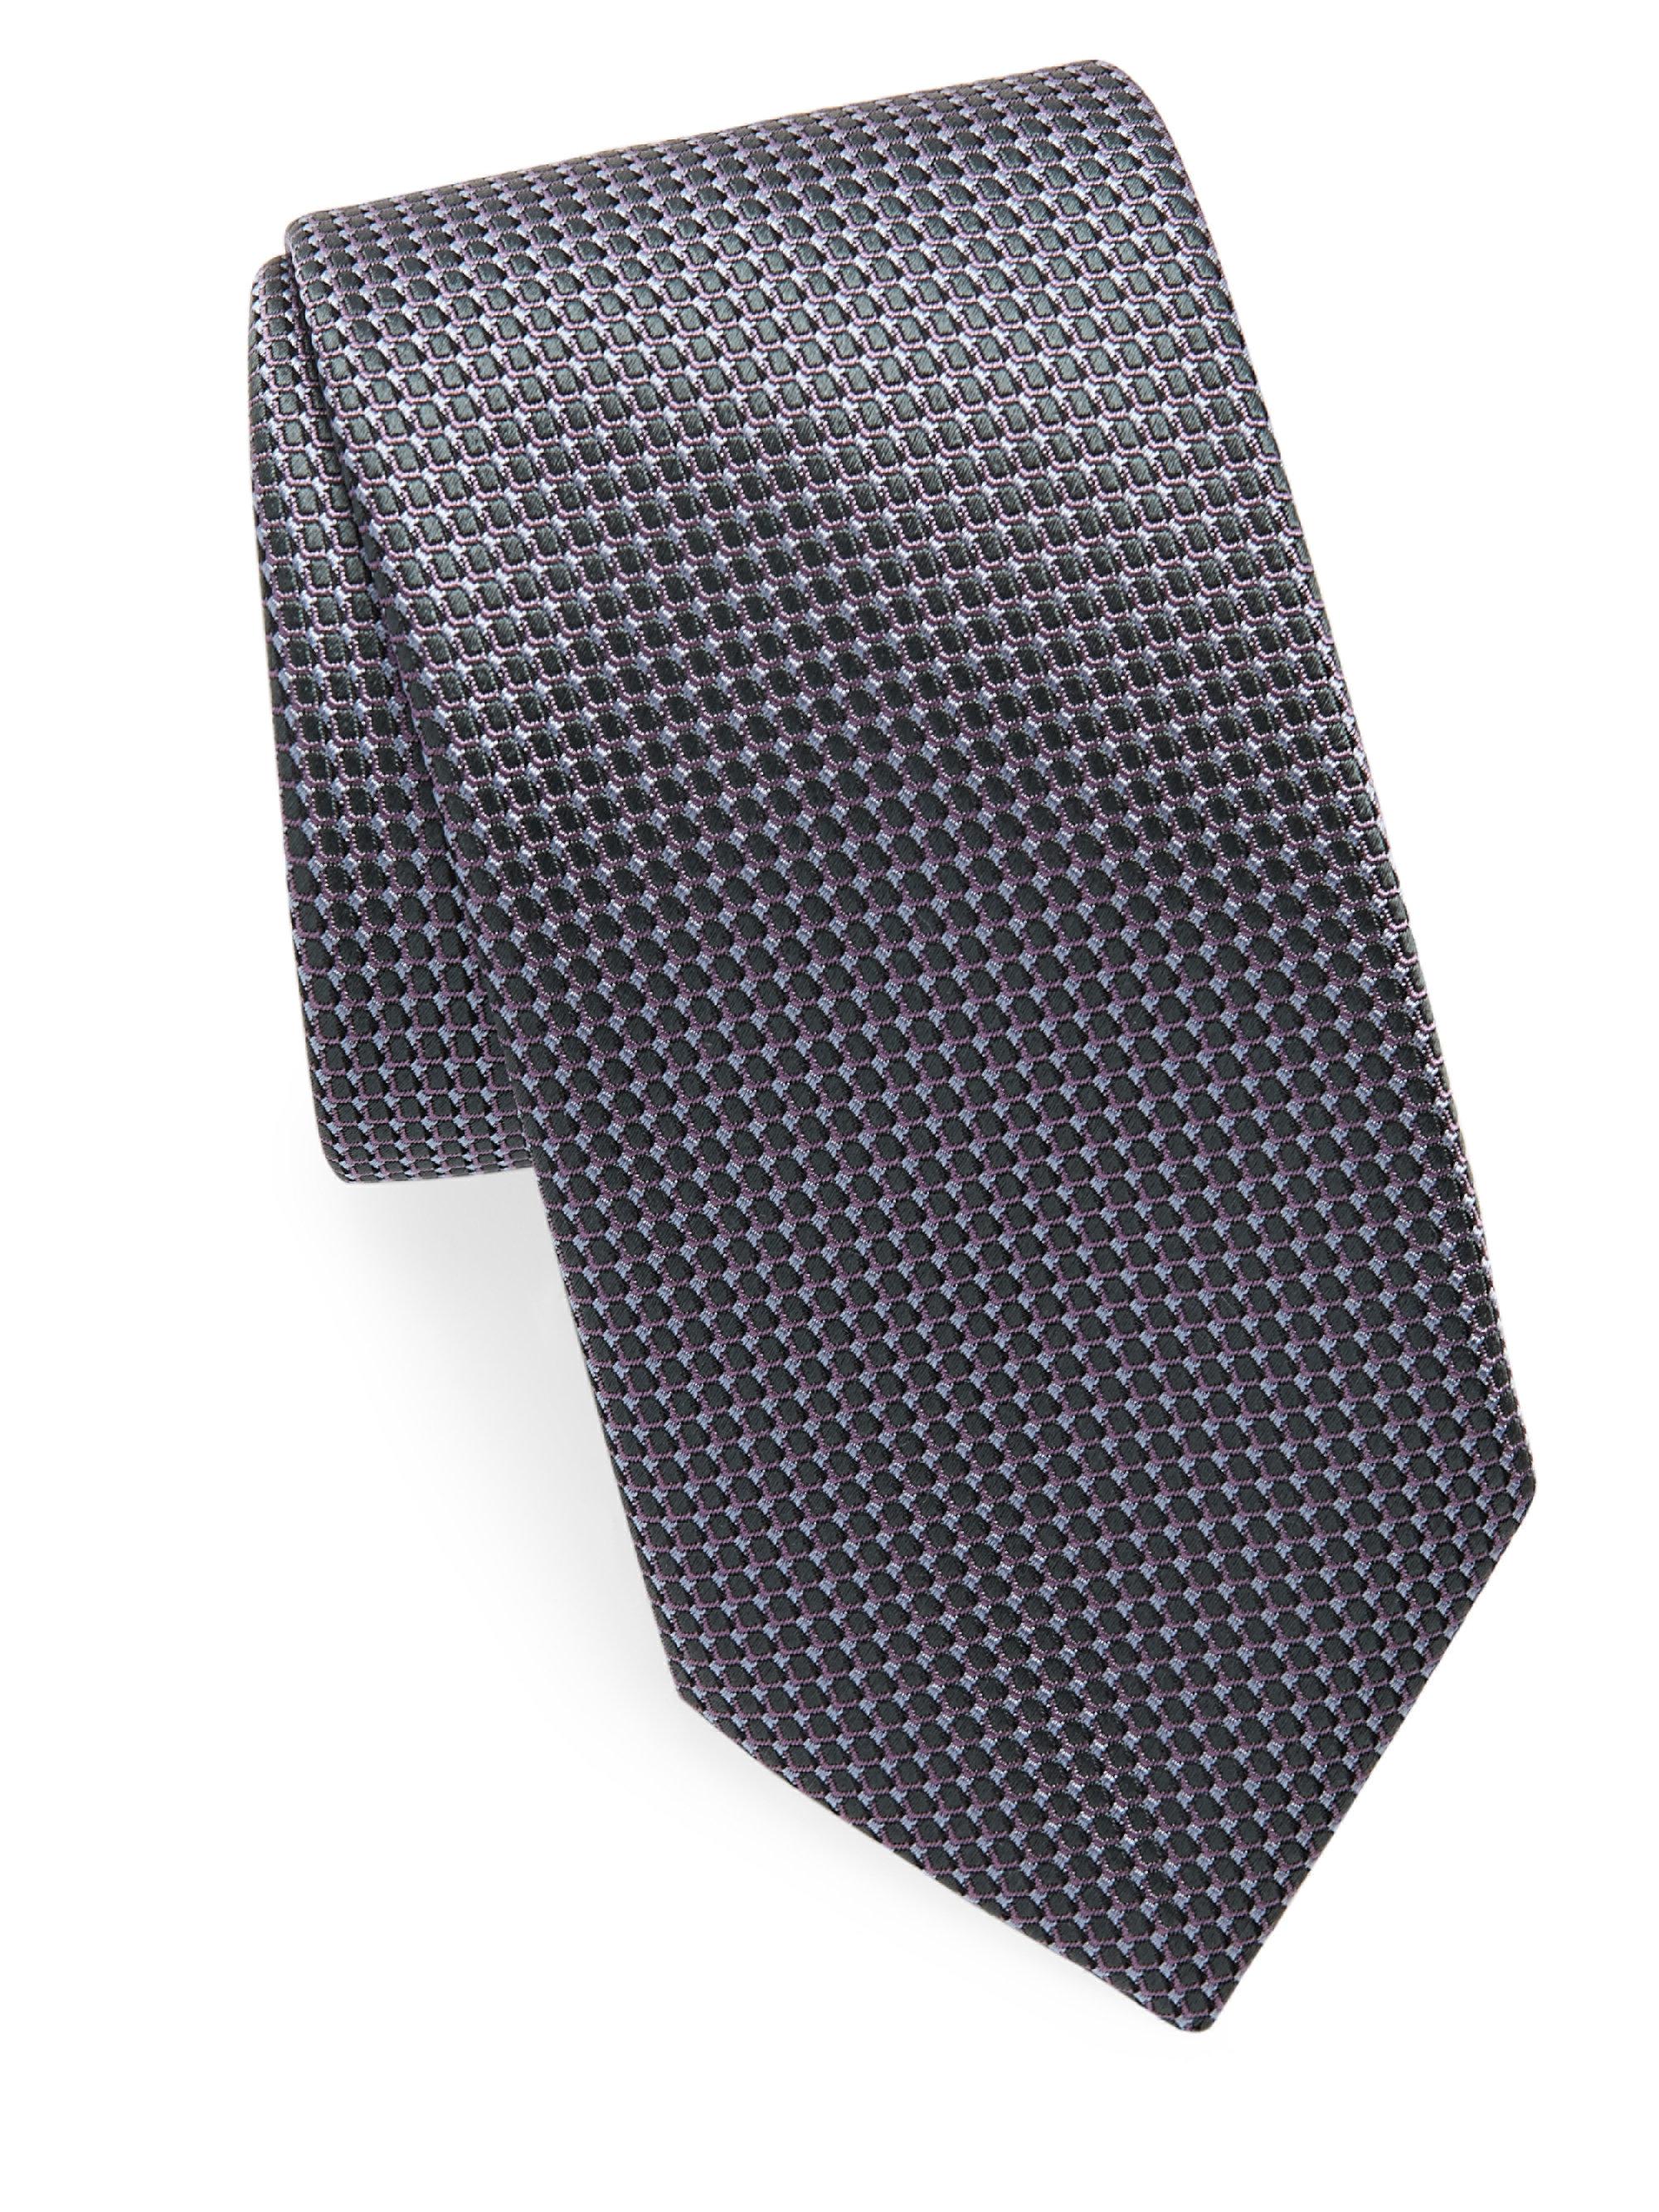 Lyst - Brioni Geometric Silk Tie in Gray for Men